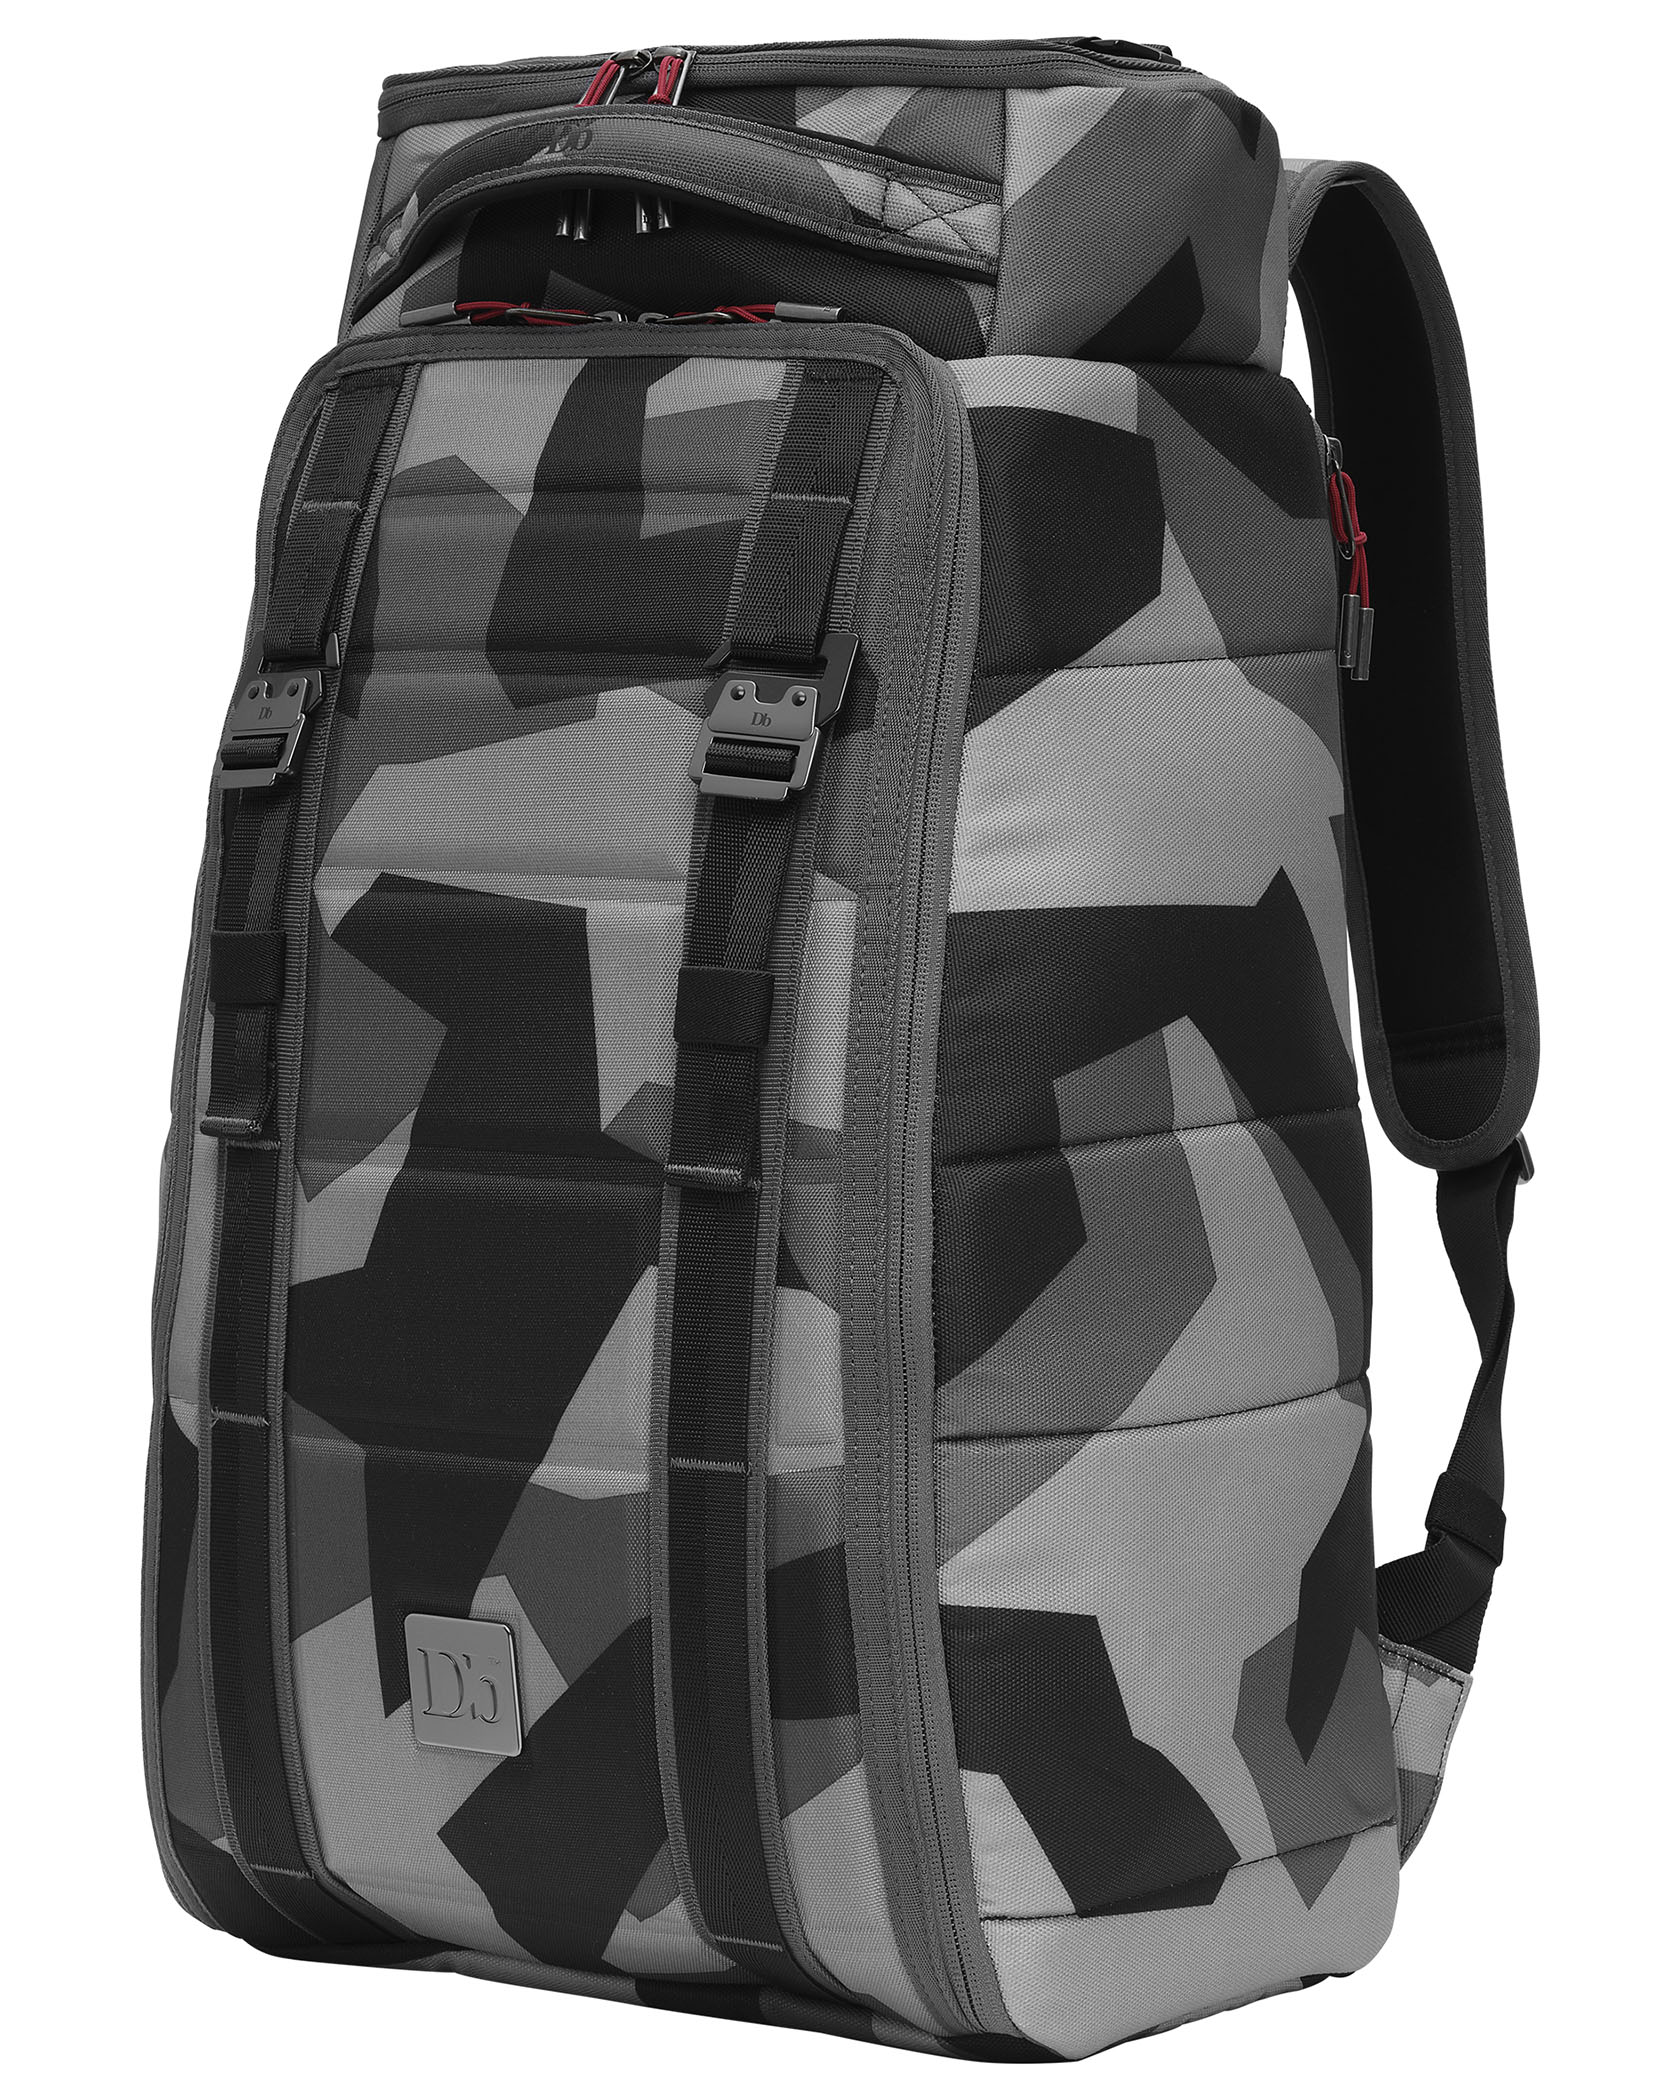 DB The Hugger 30L Backpack LTD JO Camo